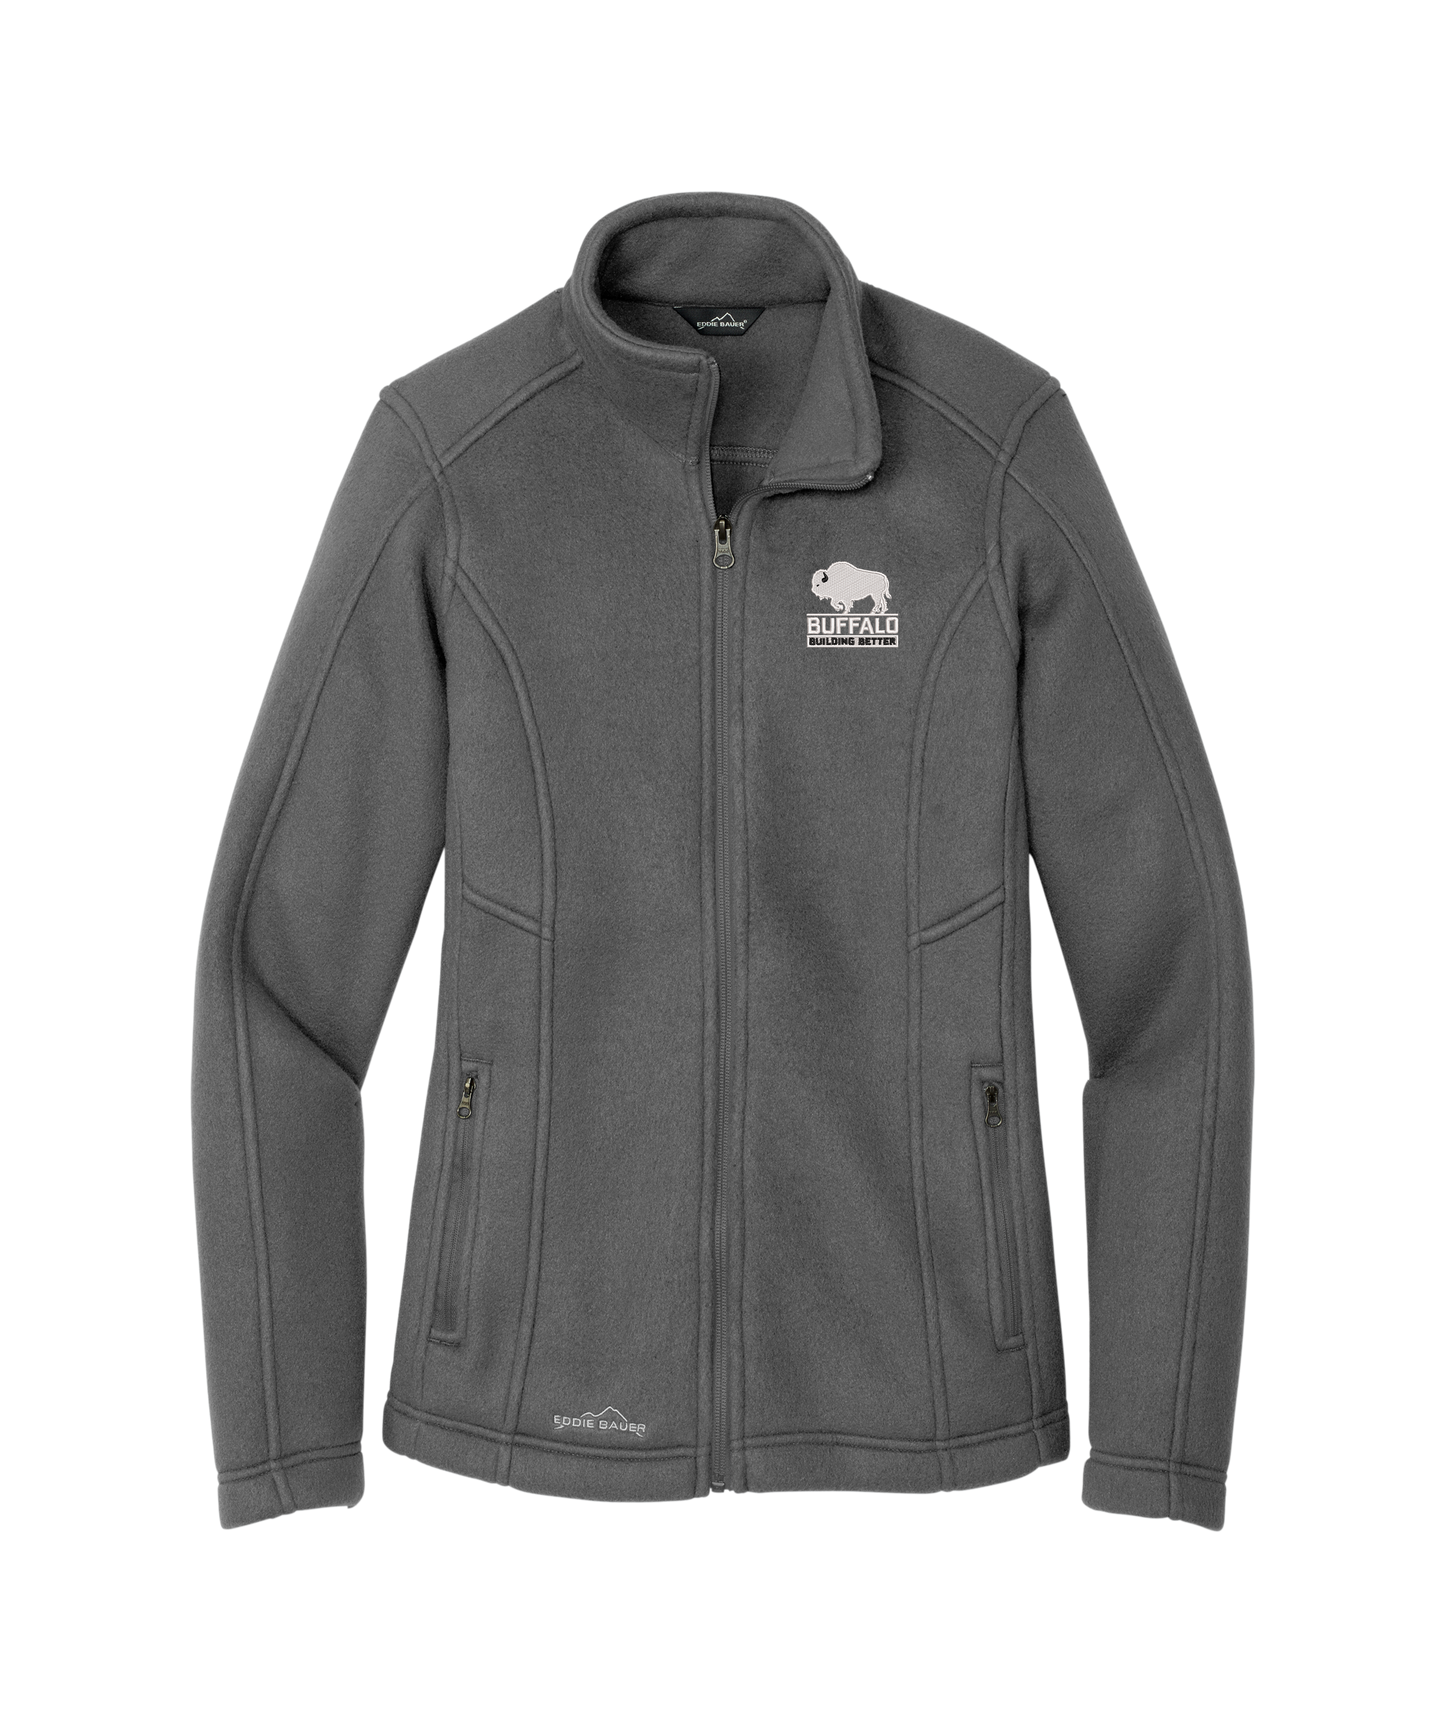 Eddie Bauer® Ladies Full-Zip Fleece Jacket